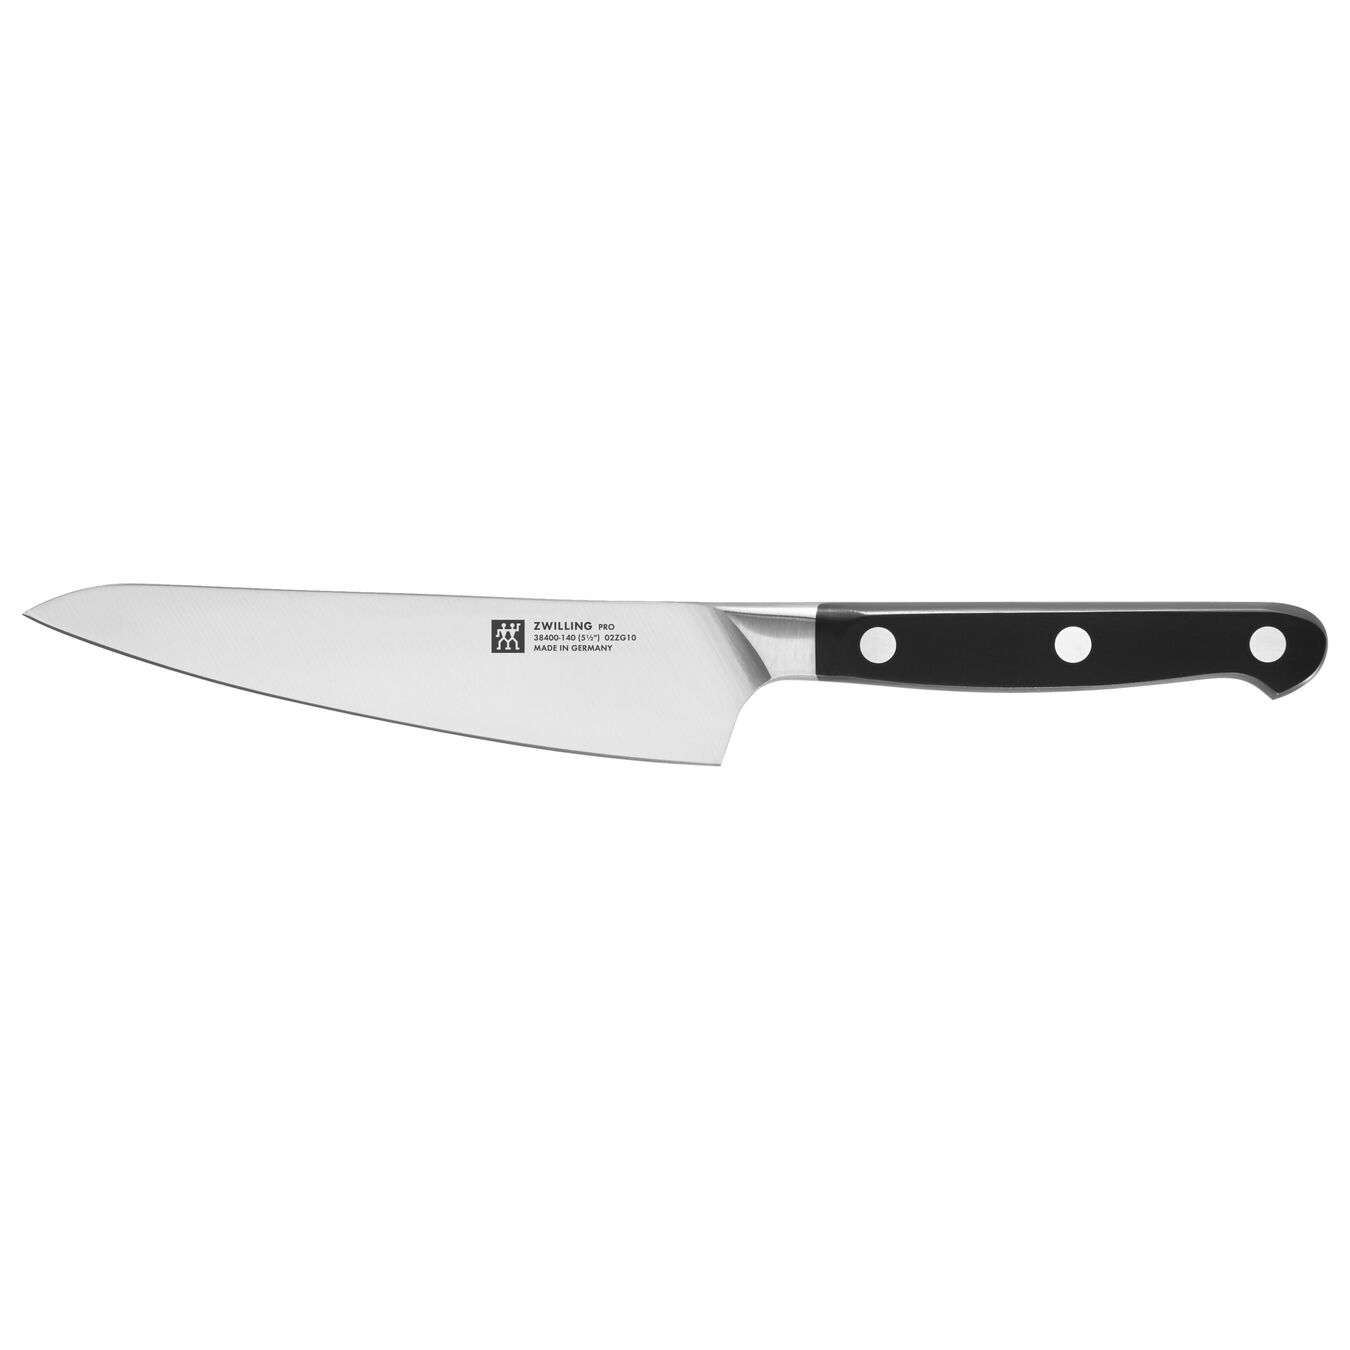 Kompakt Şef Bıçağı | Özel Formül Çelik | 14 cm,,large 1